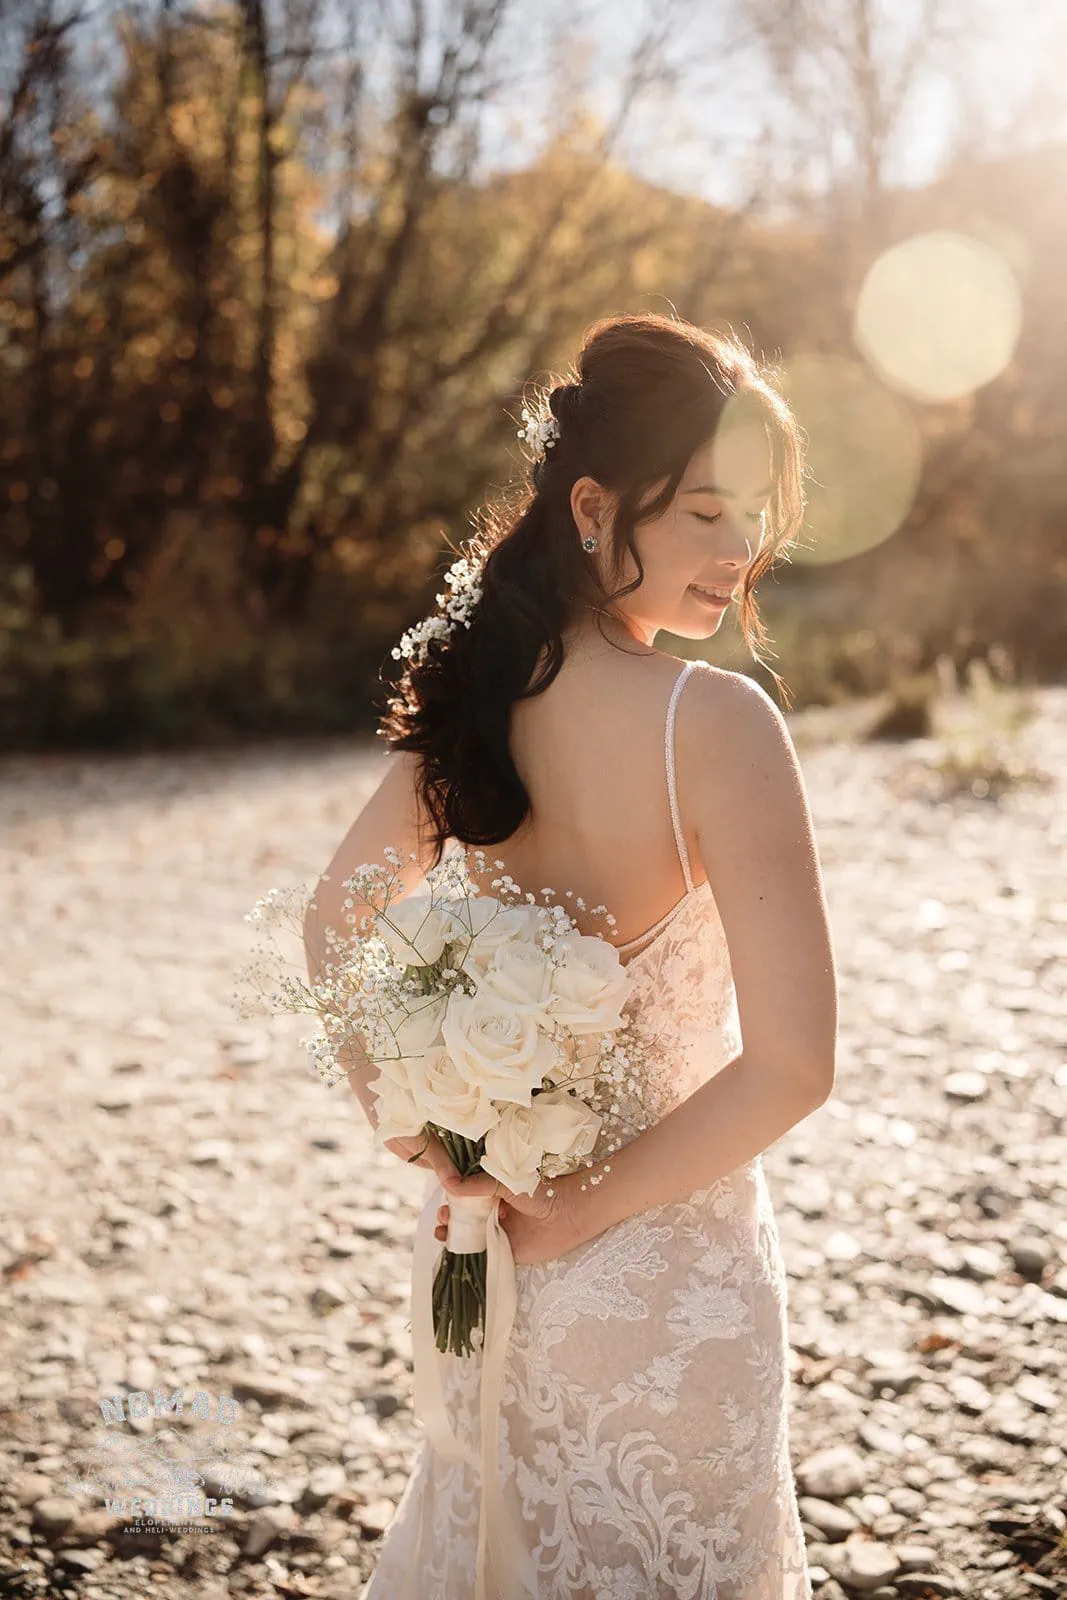 Keywords: bride, wedding dress, bouquet, river.